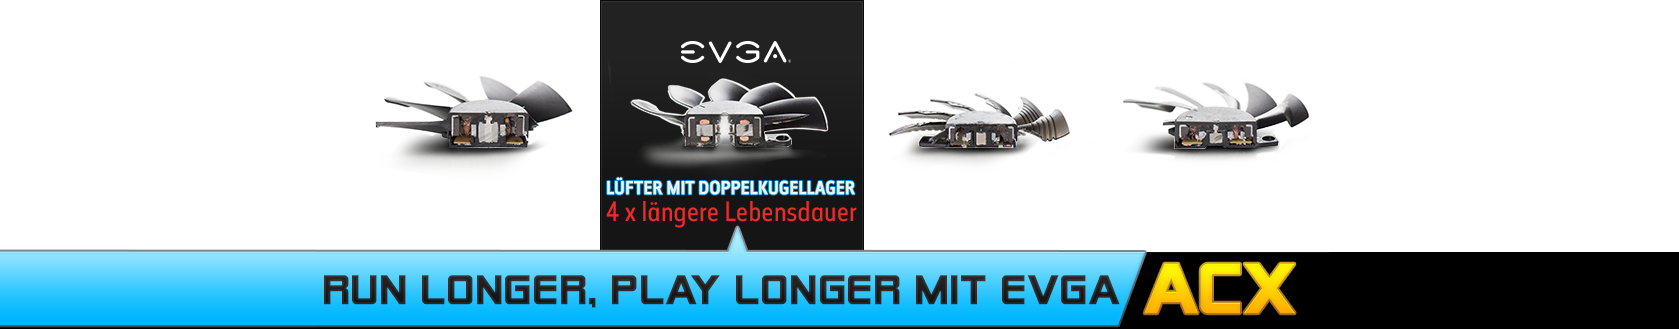 Run Longer, Play Longer mit EVGA ACX 3.0